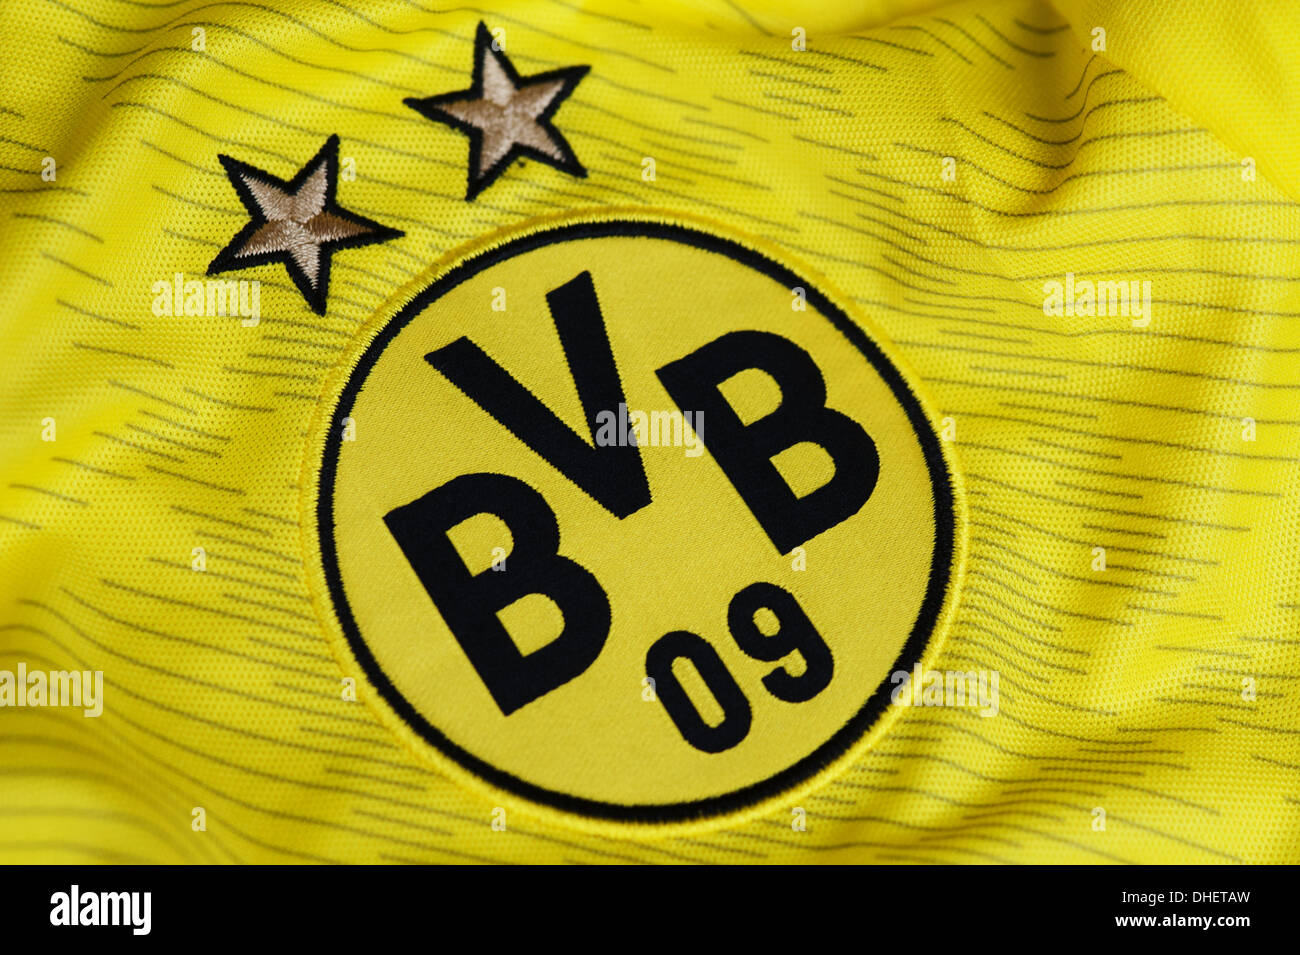 Borussia Dortmund Club Badge Stock Photo